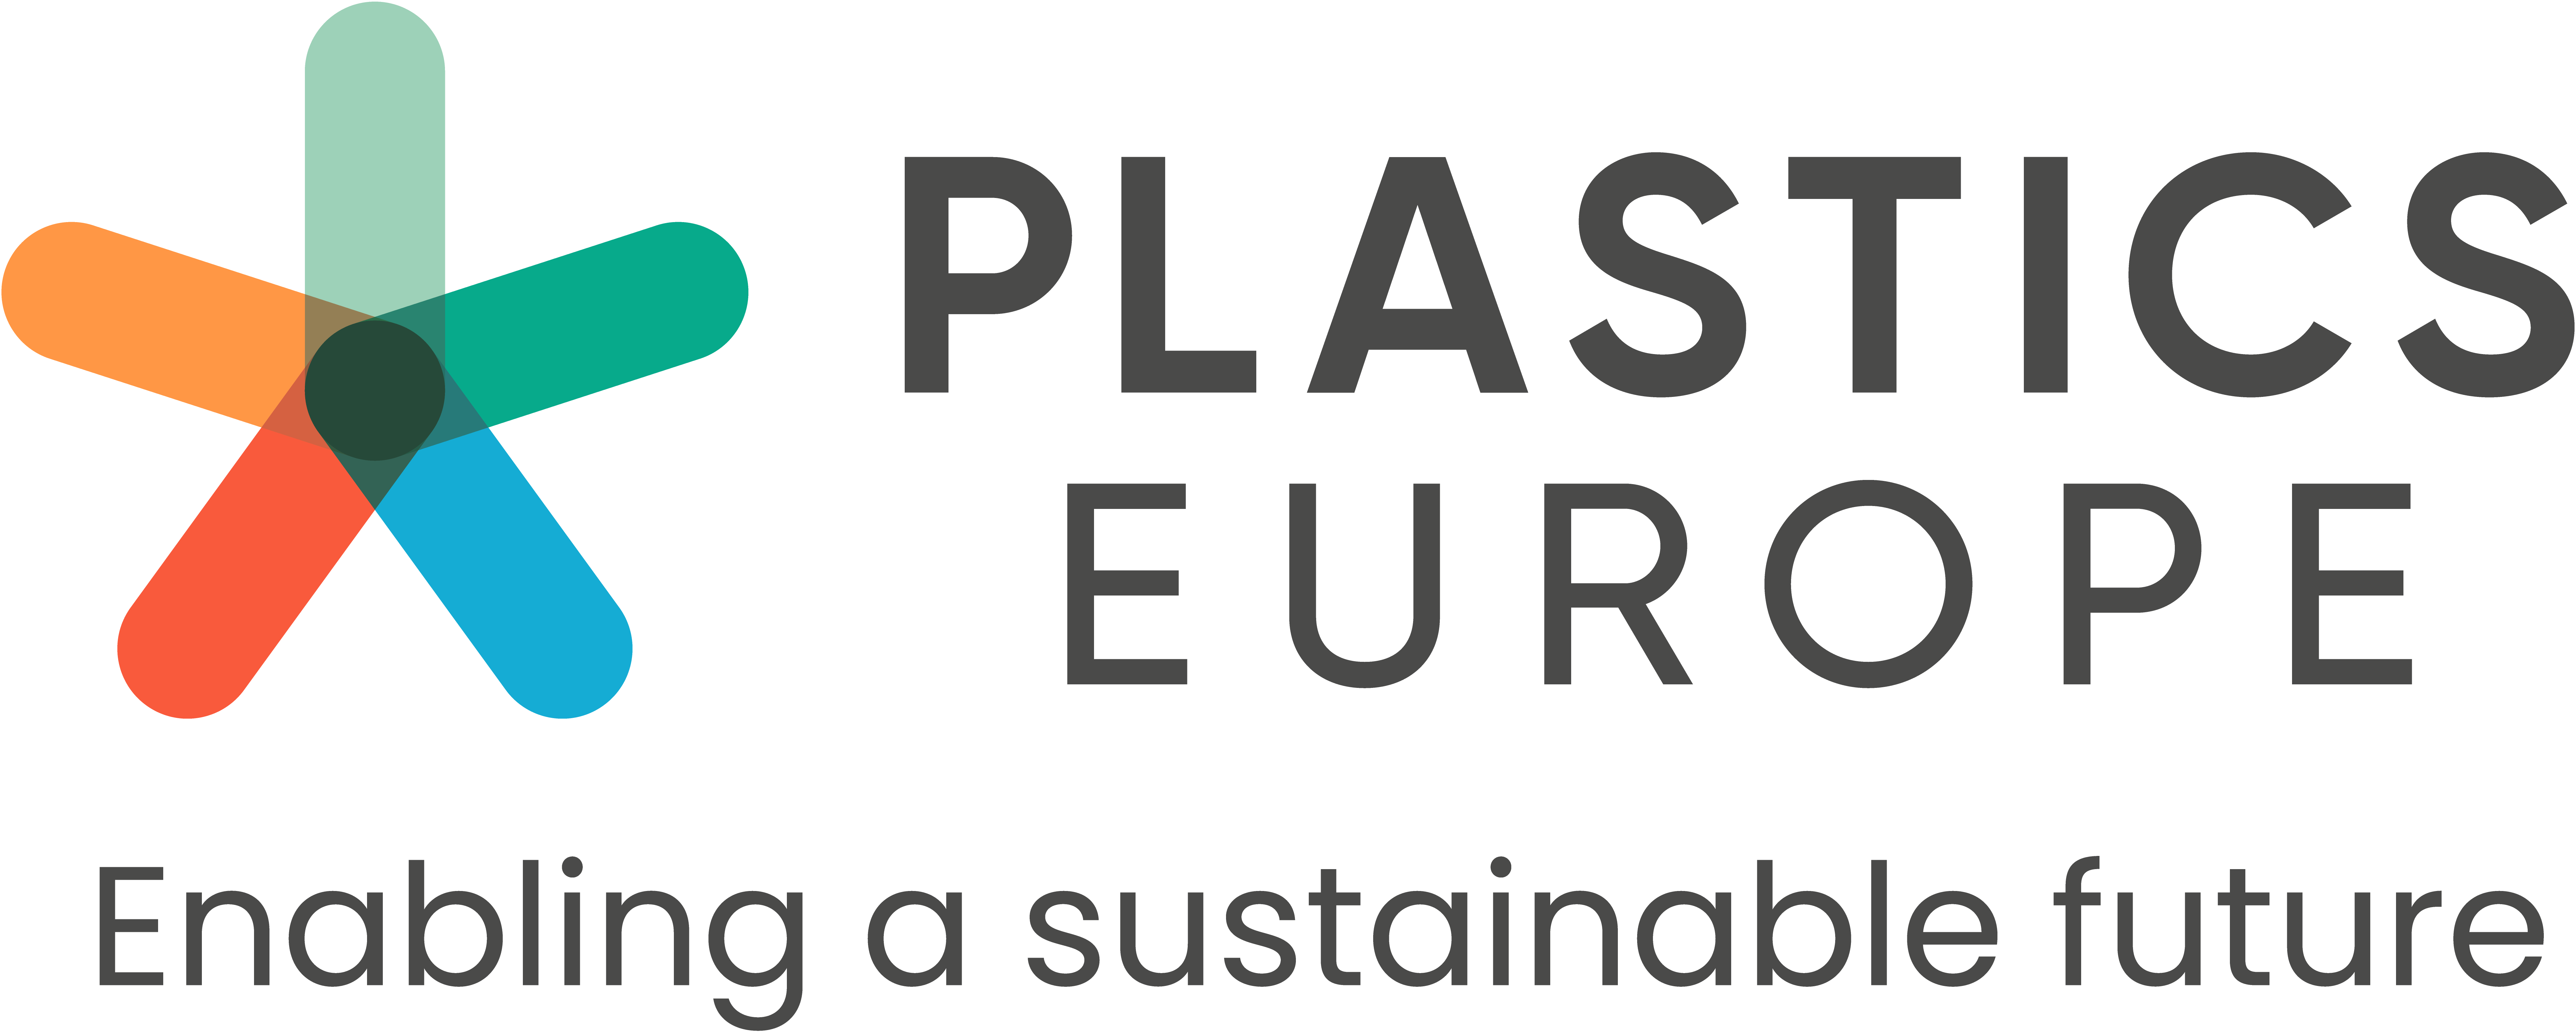 Plastics Europe - Enabling a sustainable Future